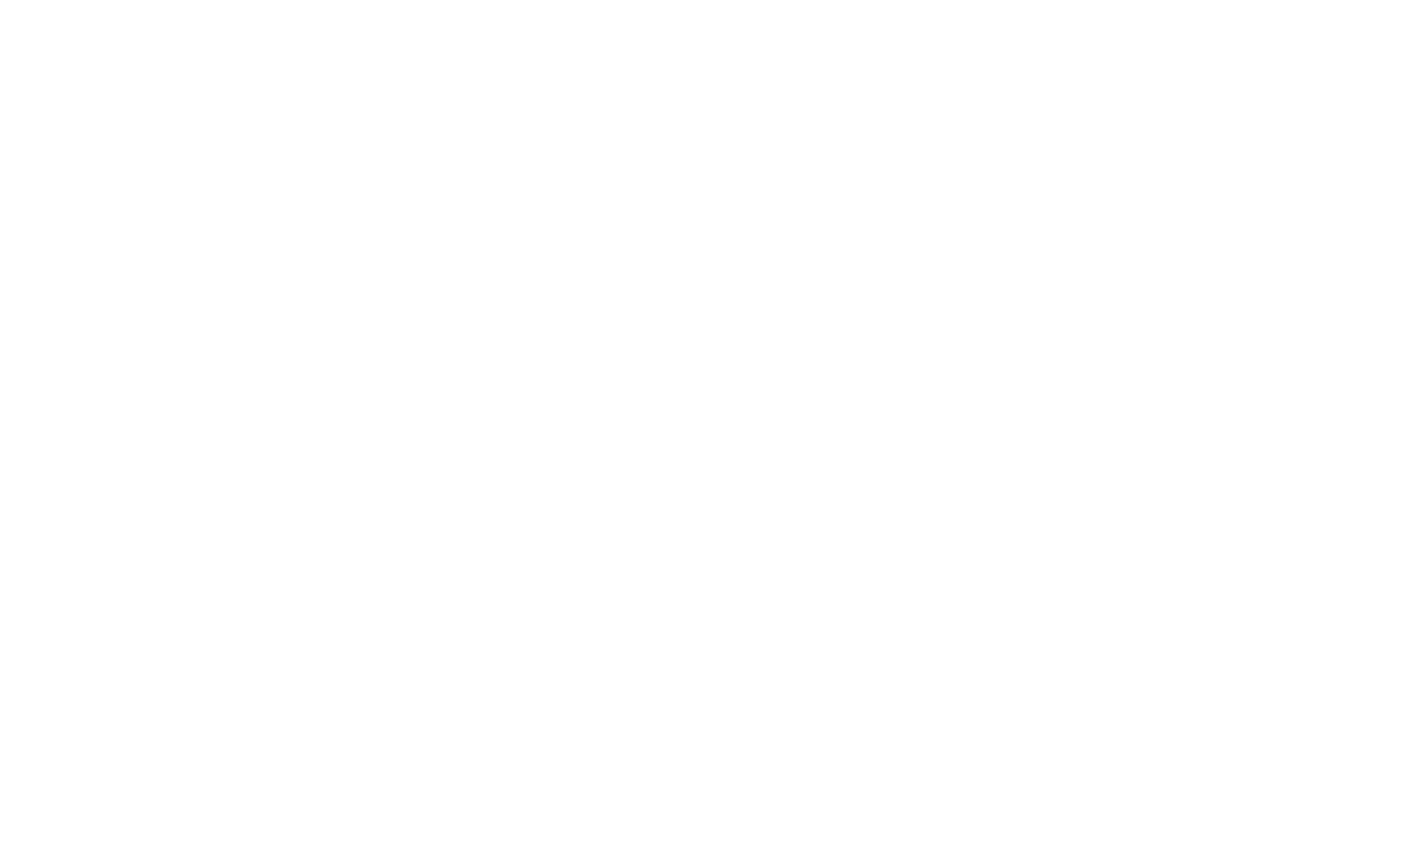 Import China